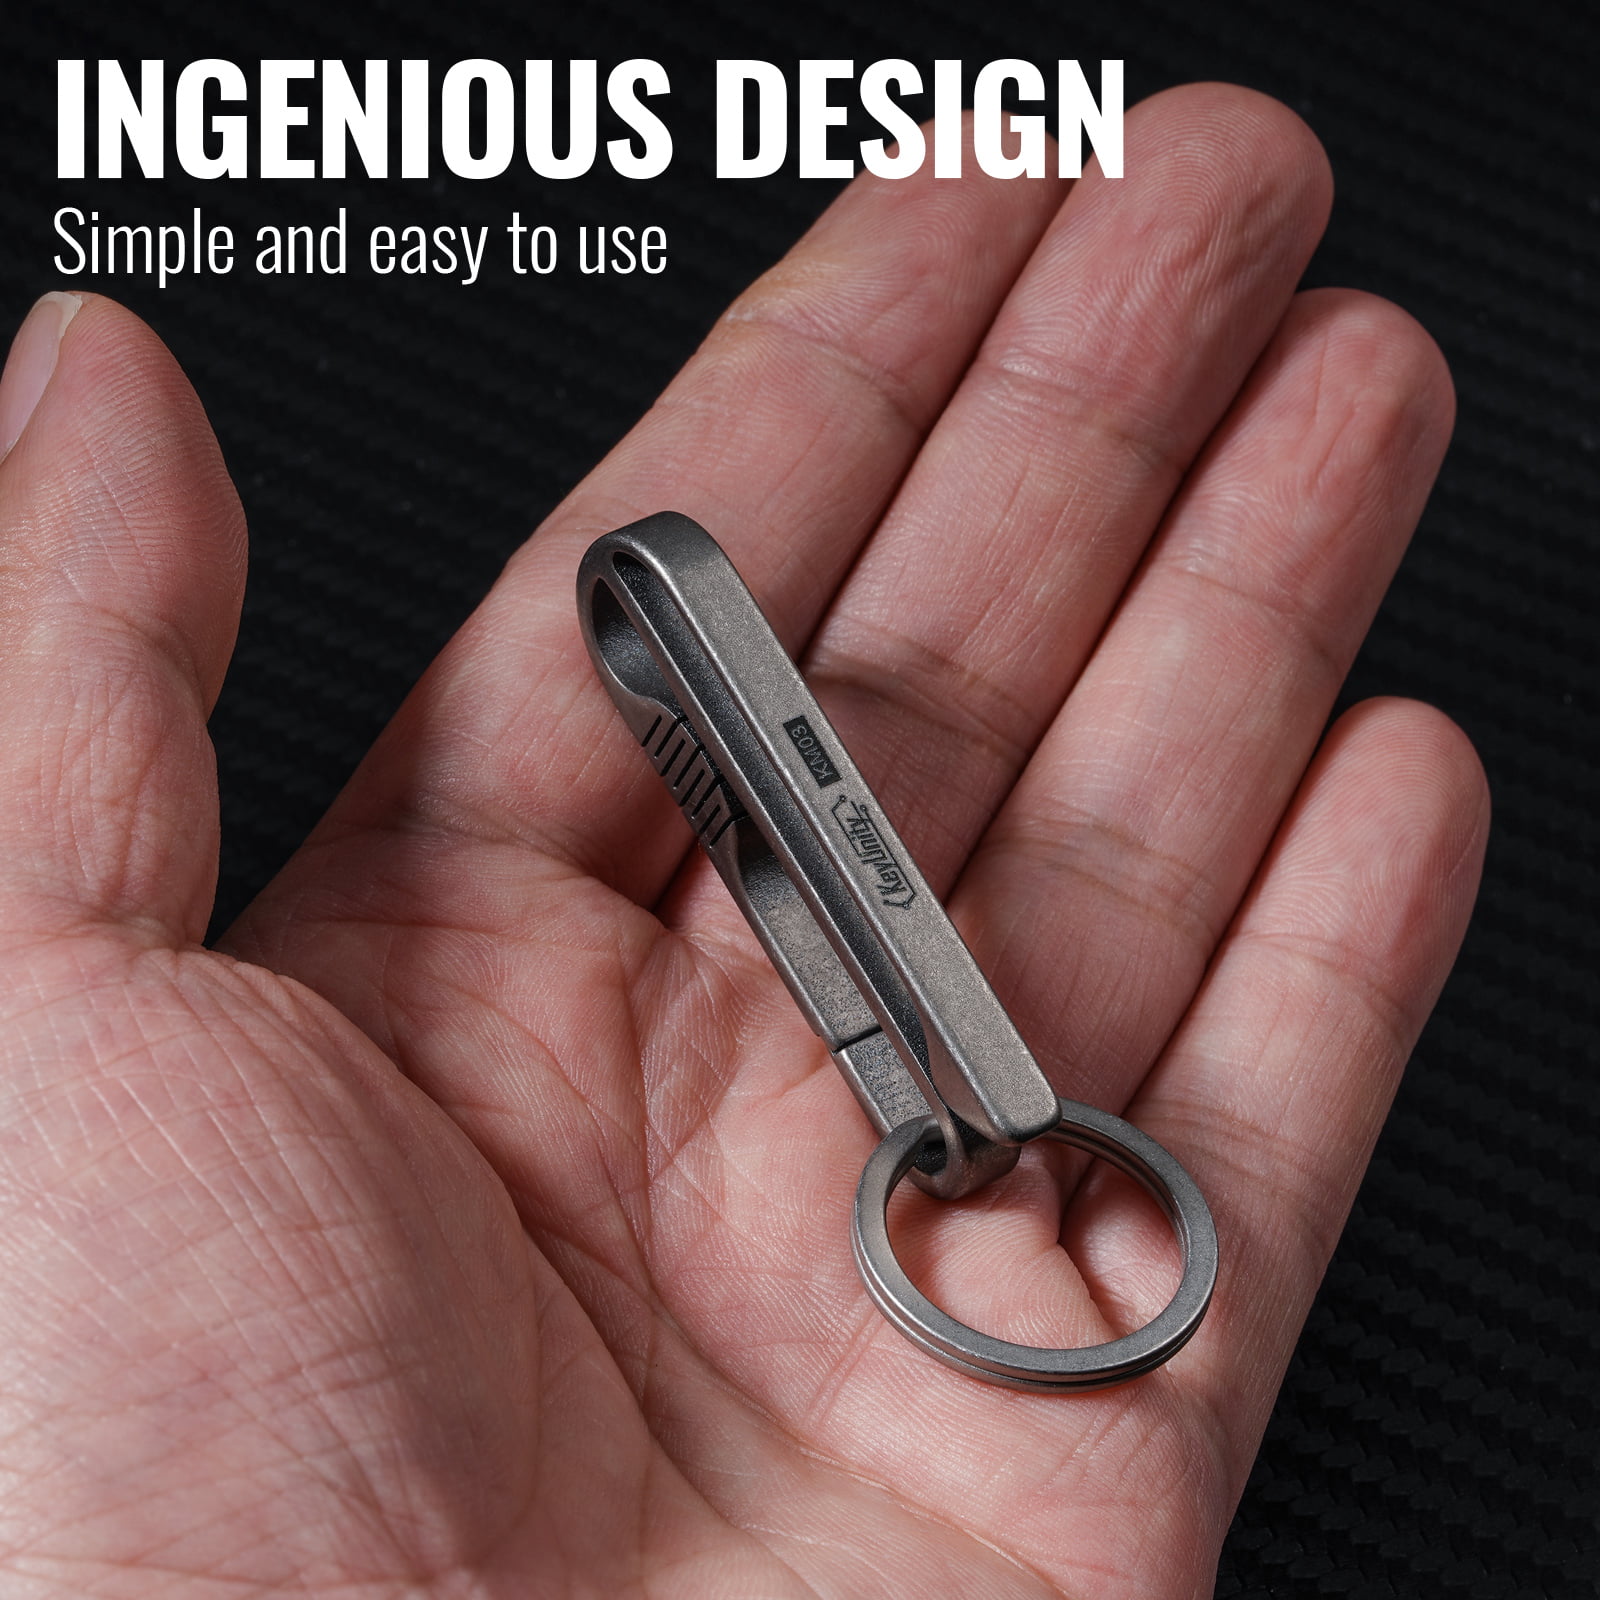 GENEMA Ultra Lightweight Titanium Alloy Keychain with Key Ring Carabiner  Car Key Chains